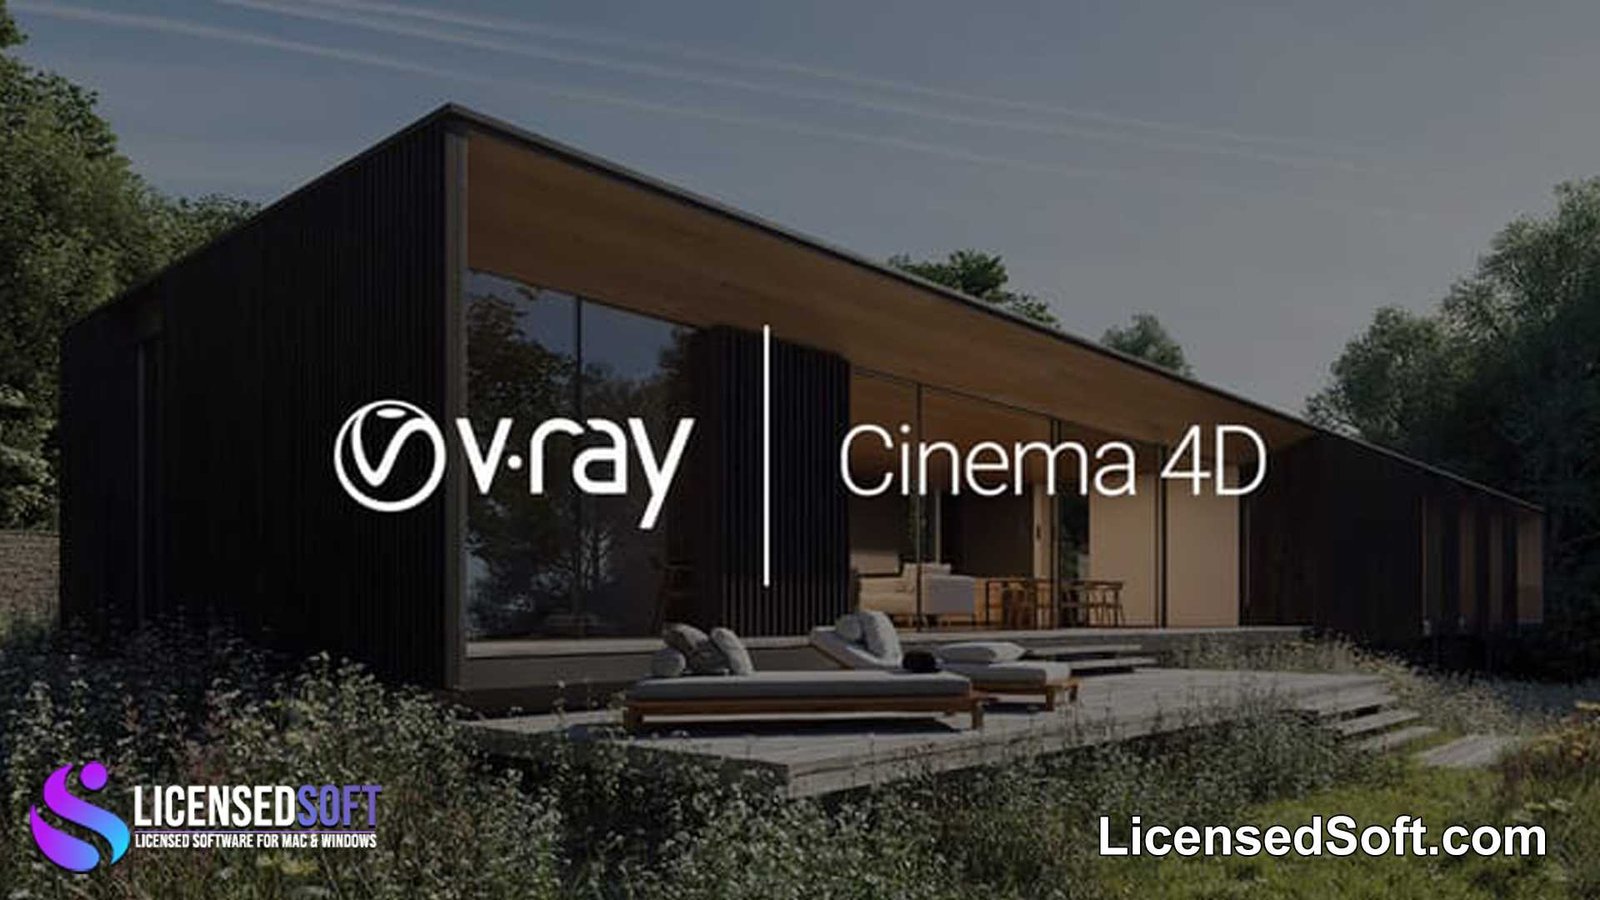 Chaos VRay License v6.00.04 for Cinema 4D Lifetime Premium By LicensedSoft